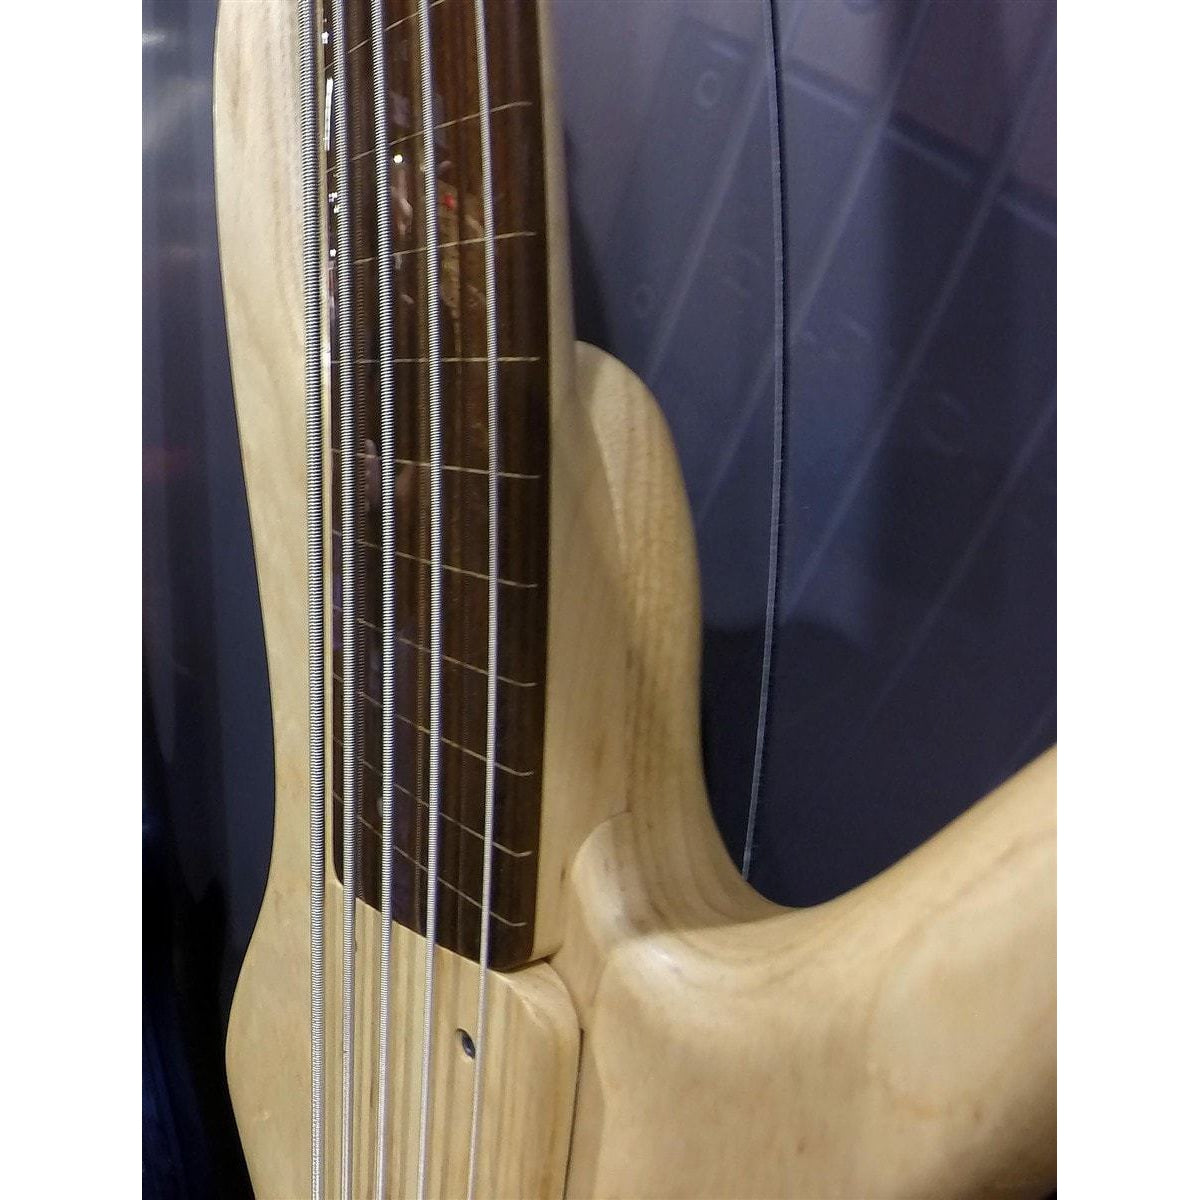 Ibanez GWB1005 Gary Willis Signature Bass Guitar | Natural Flat Finish